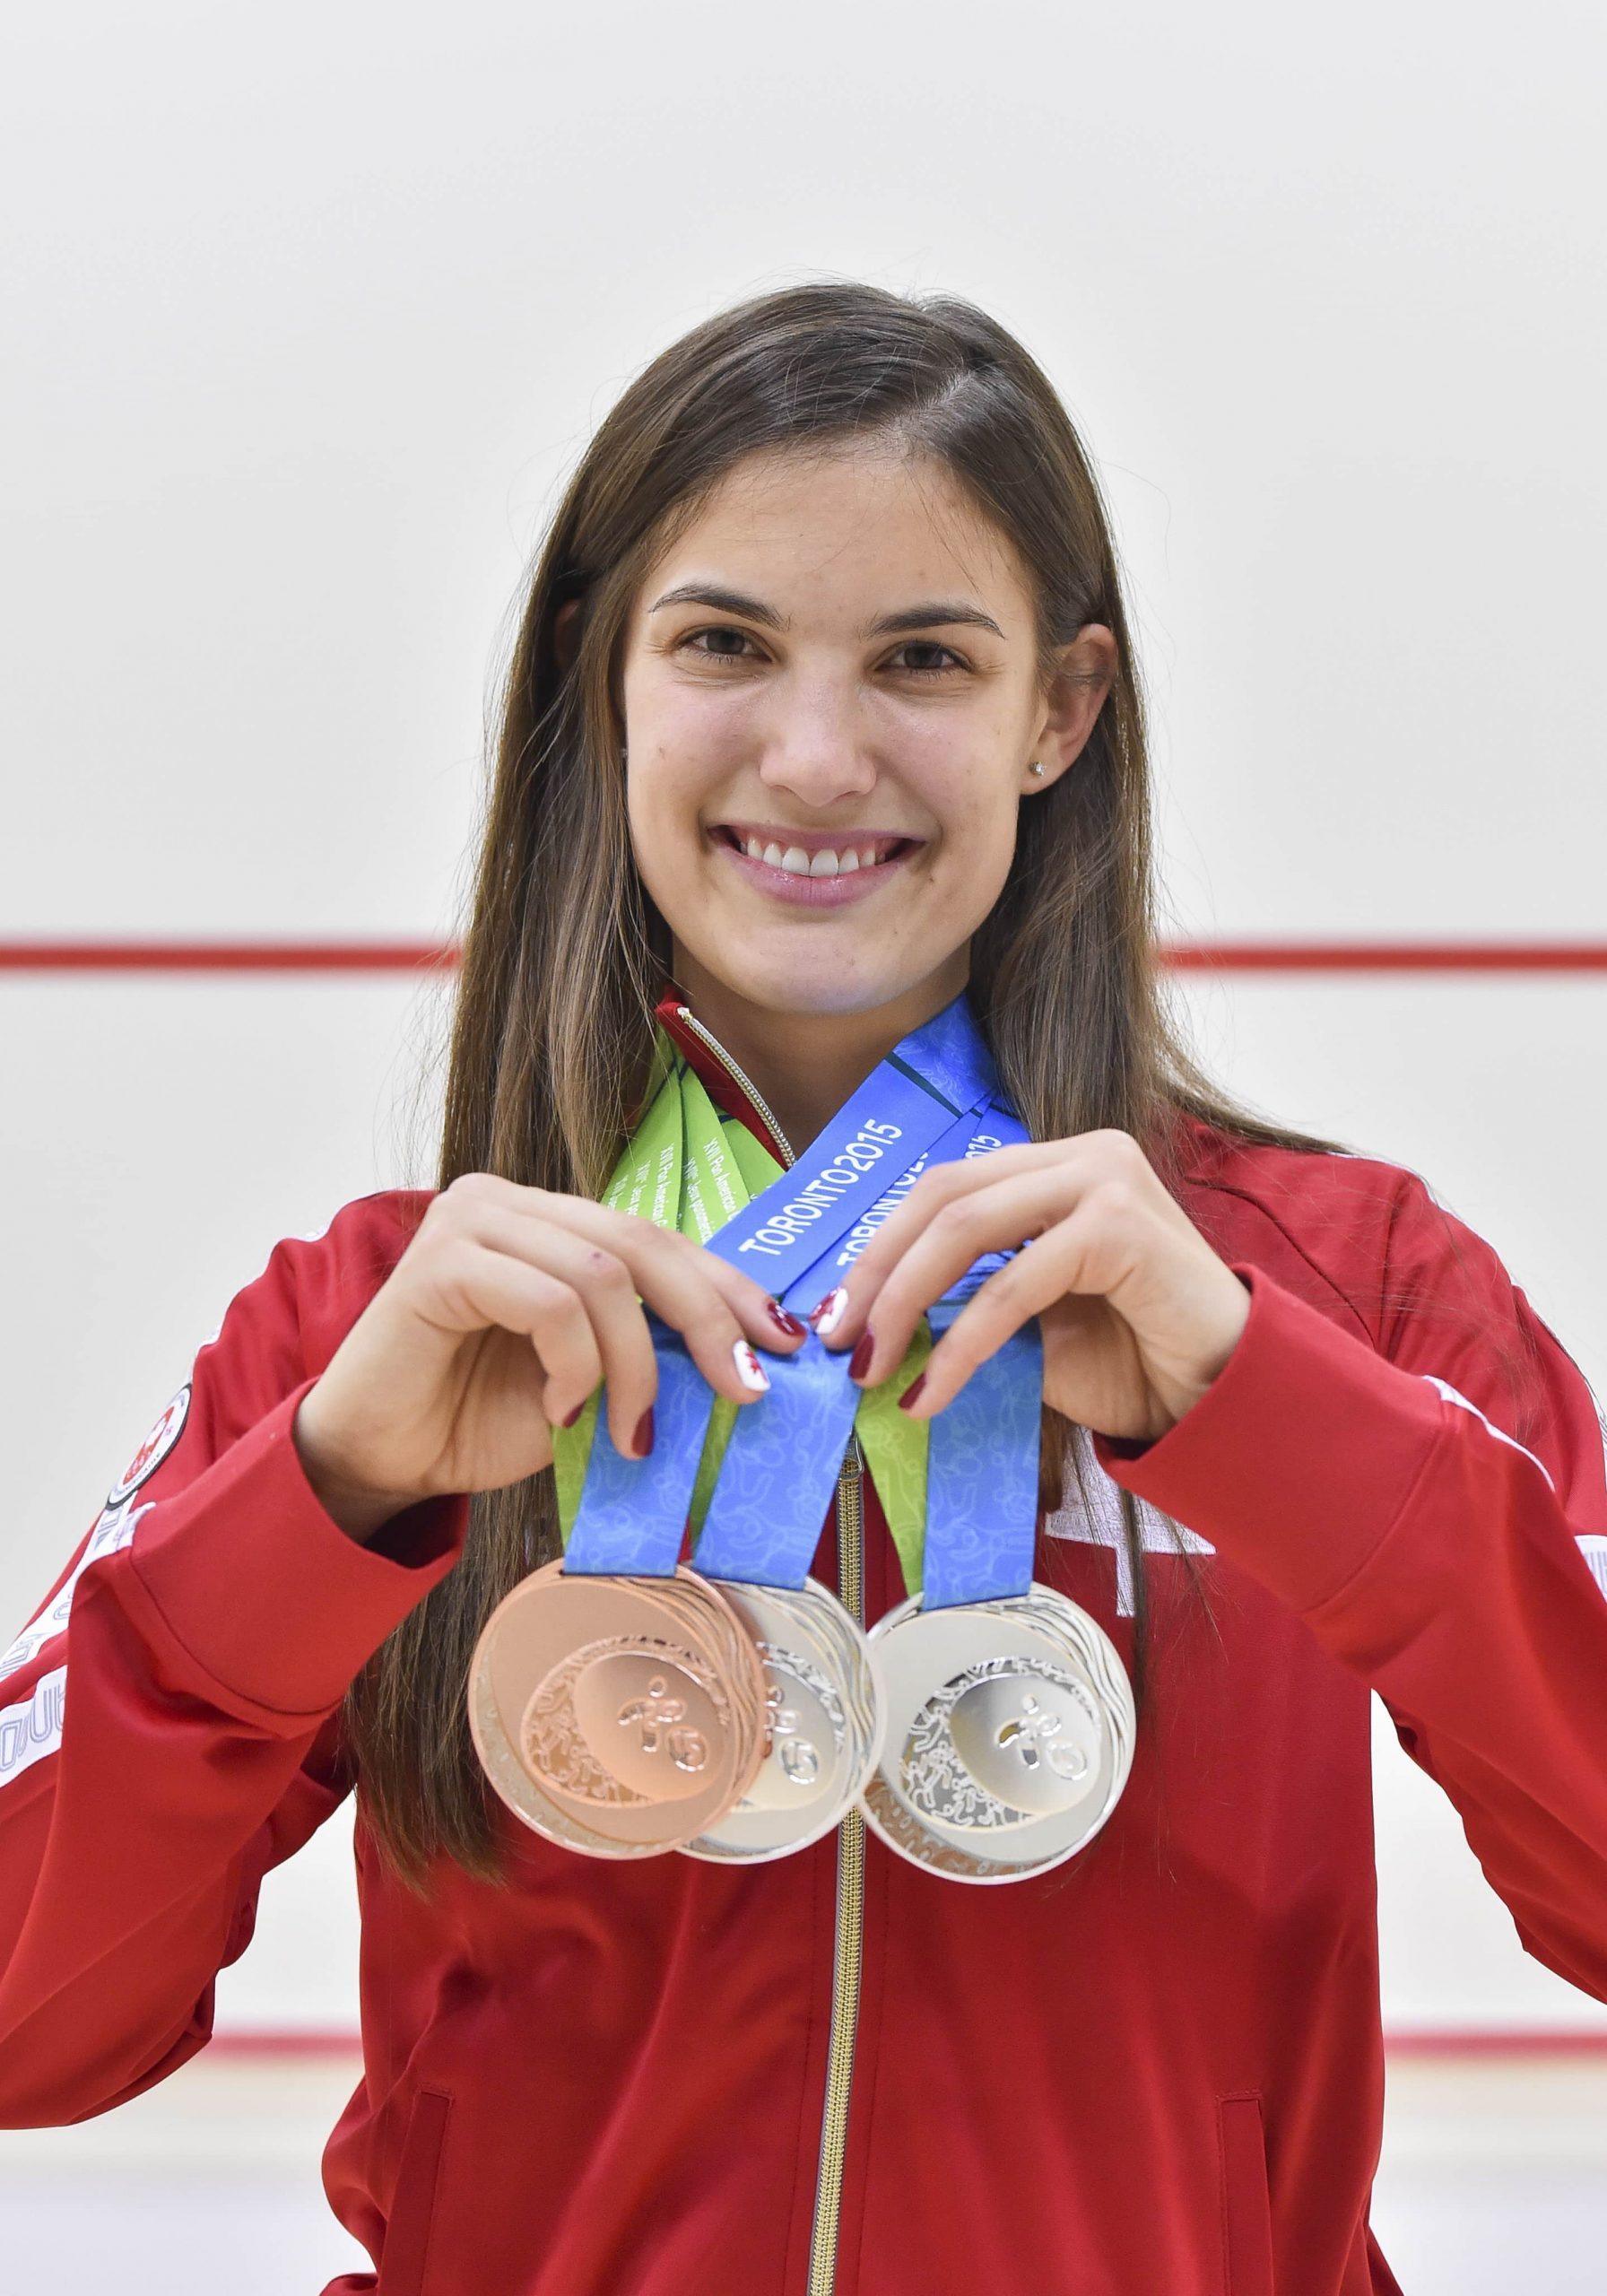 Samantha Cornett with her winning medals (World Squash Day)